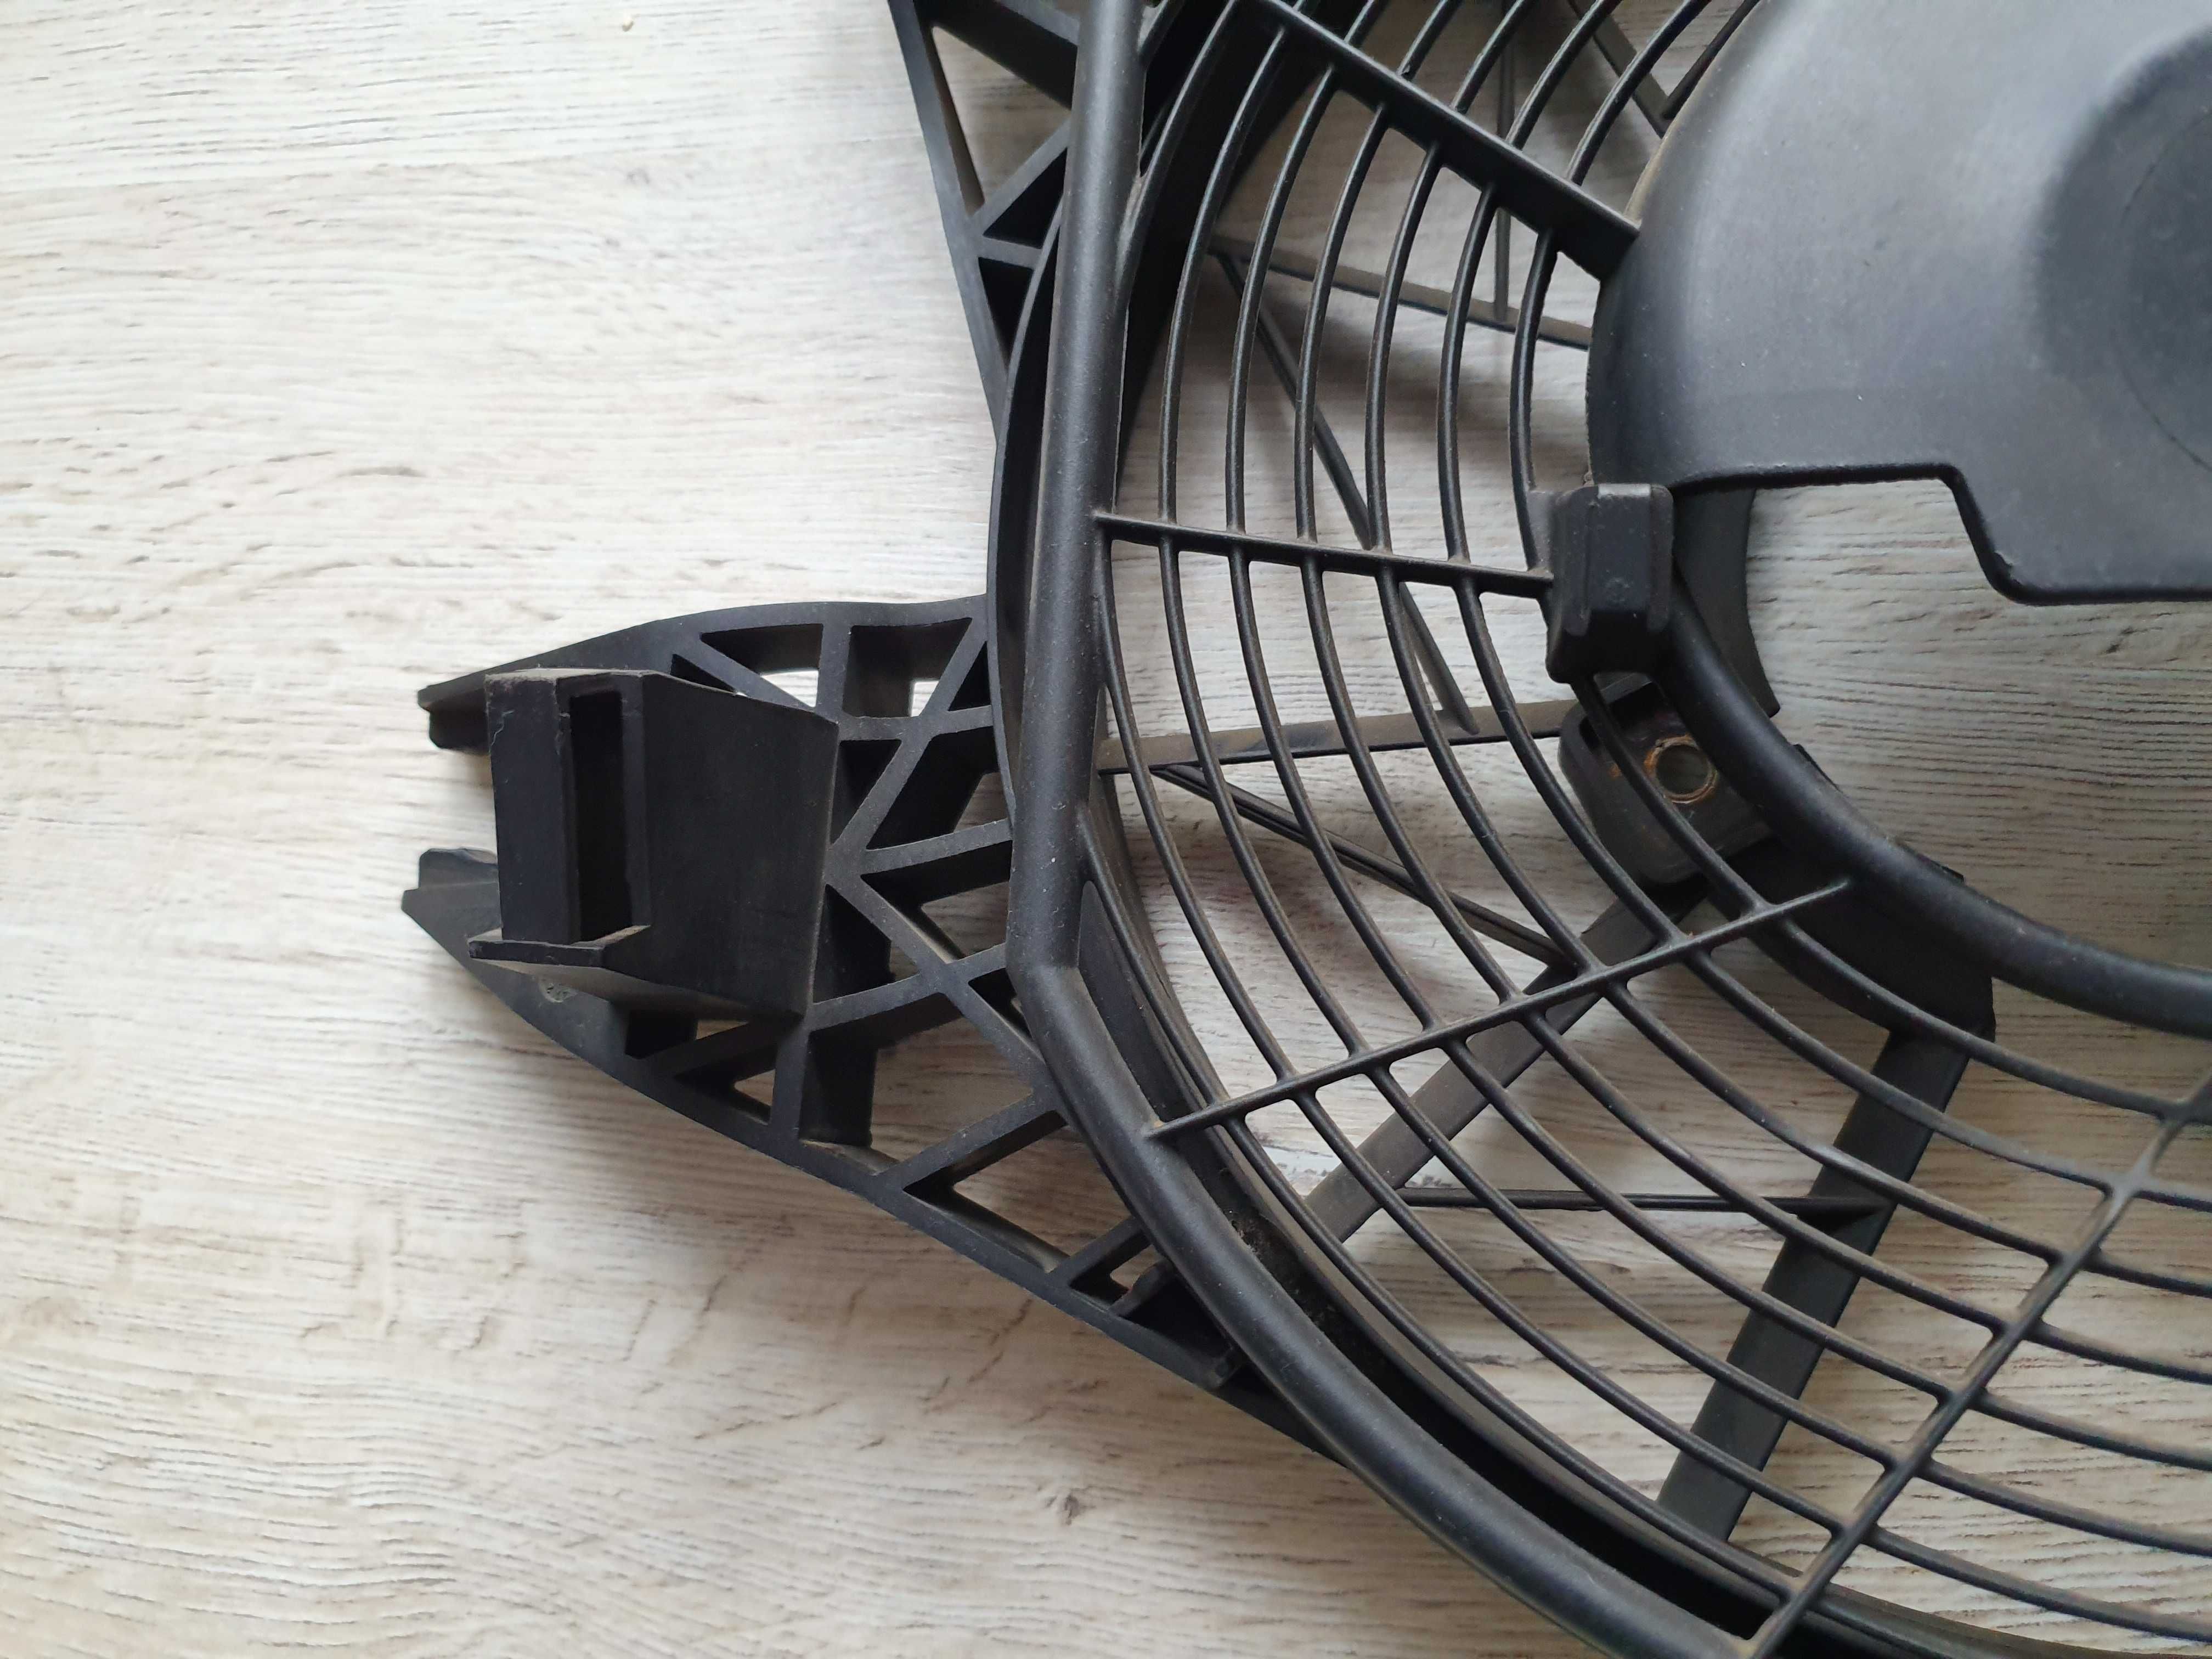 Front ventilator panel for Vito Viano 639 2010-2014 year manufacture.